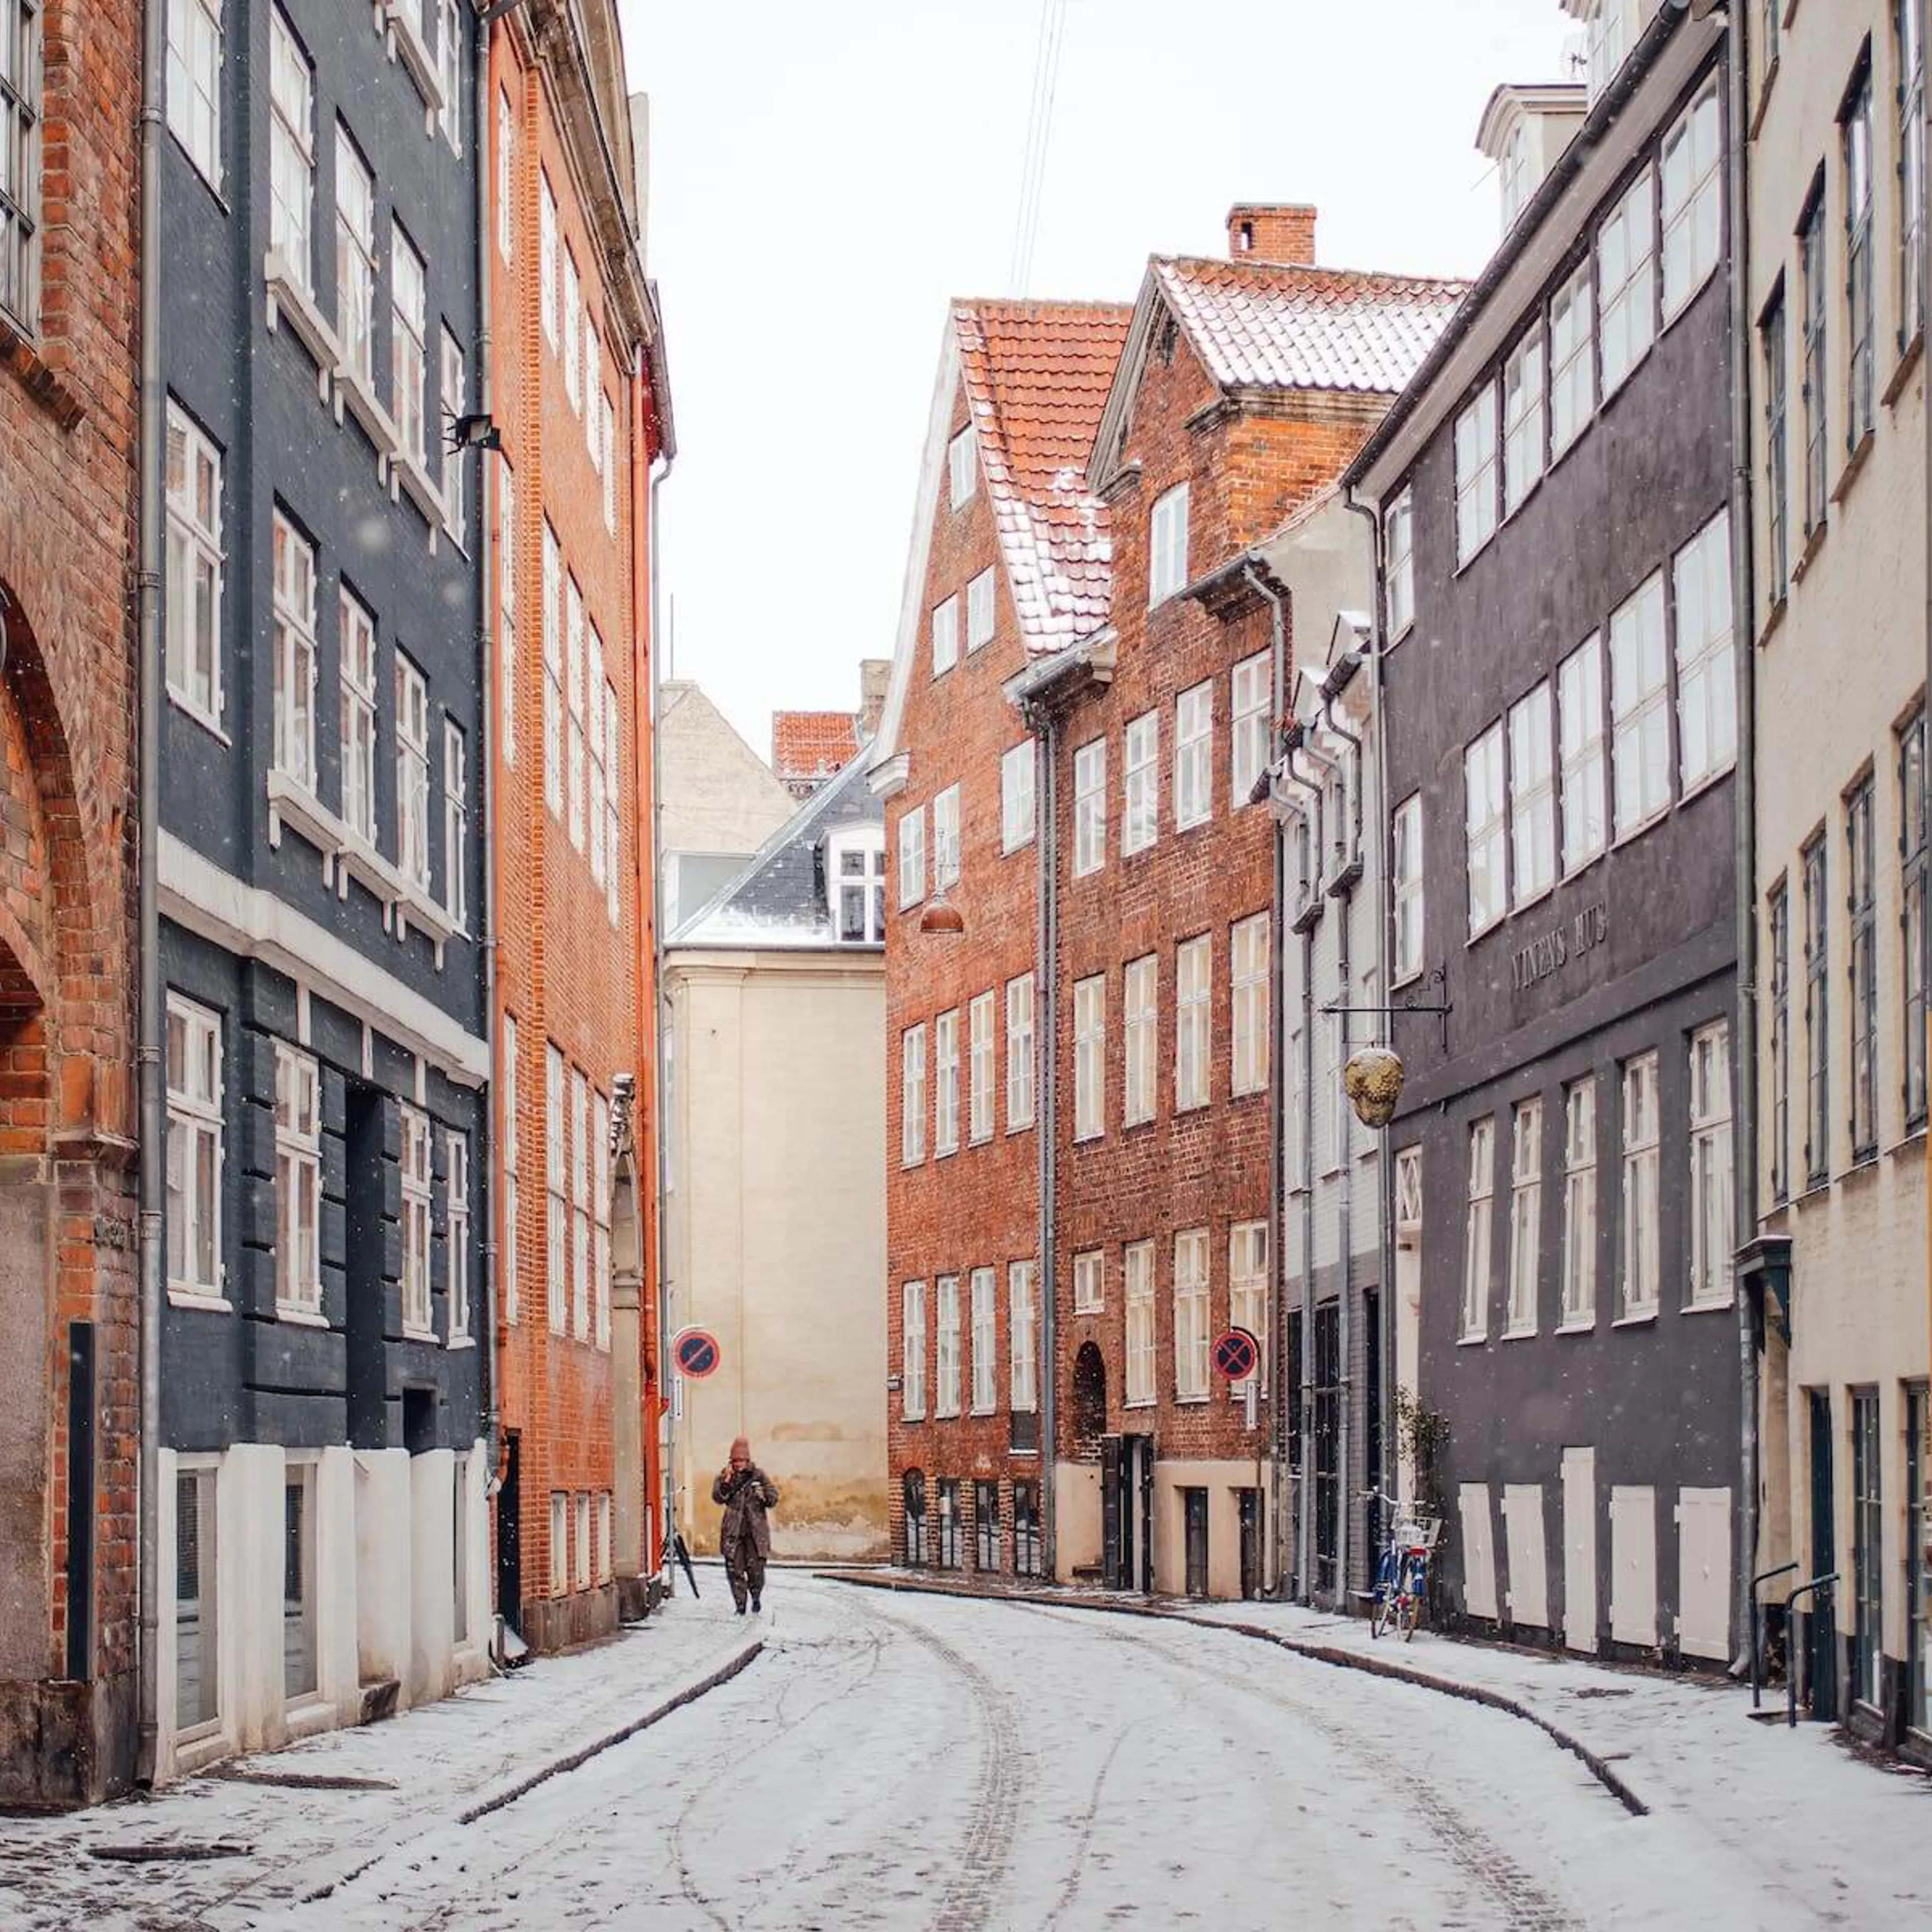 Houses in the city centre of Copenhagen in winter